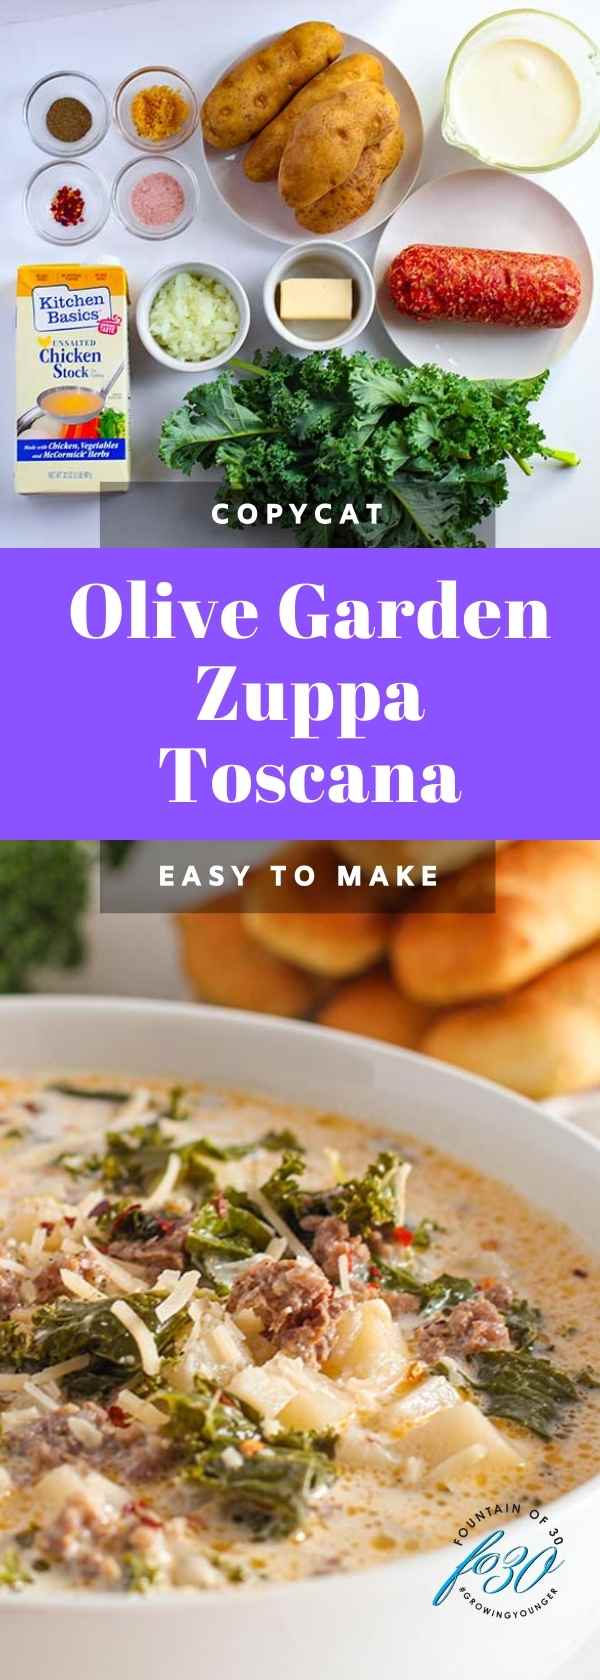 copycat zuppa toscana recipe fountainof30